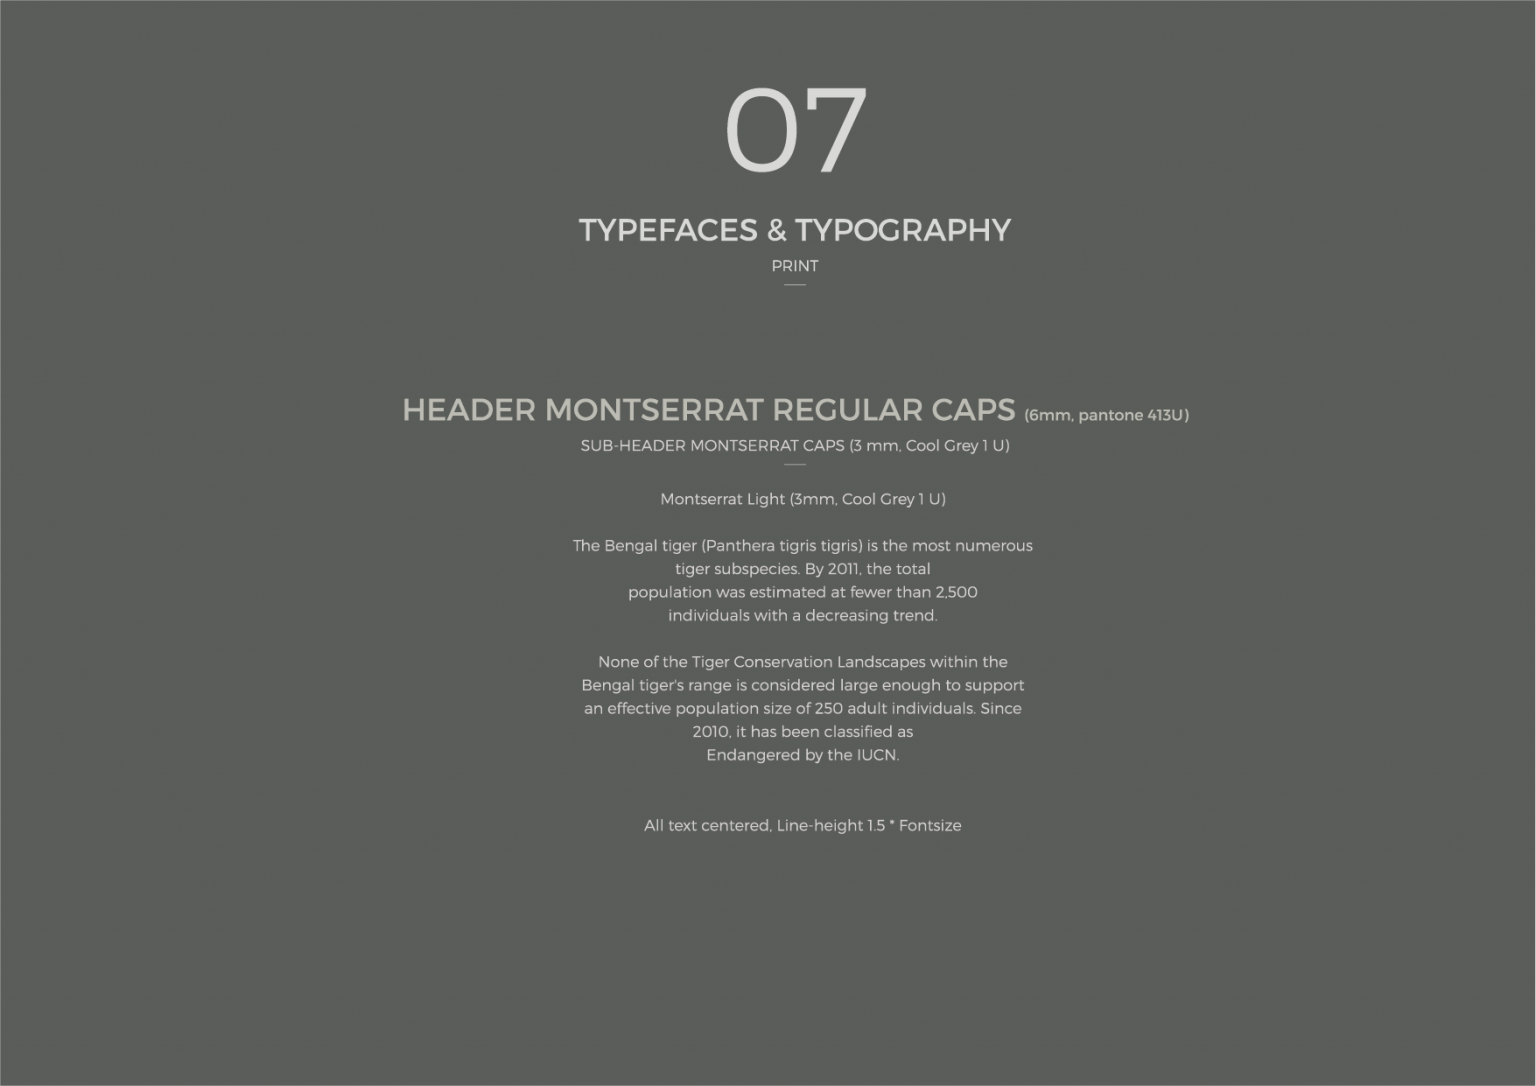 p08_BRANDBOOK-ILLUSTRATOR_FINAL_FLATTENED_07-Typeface-typography-1536x1086